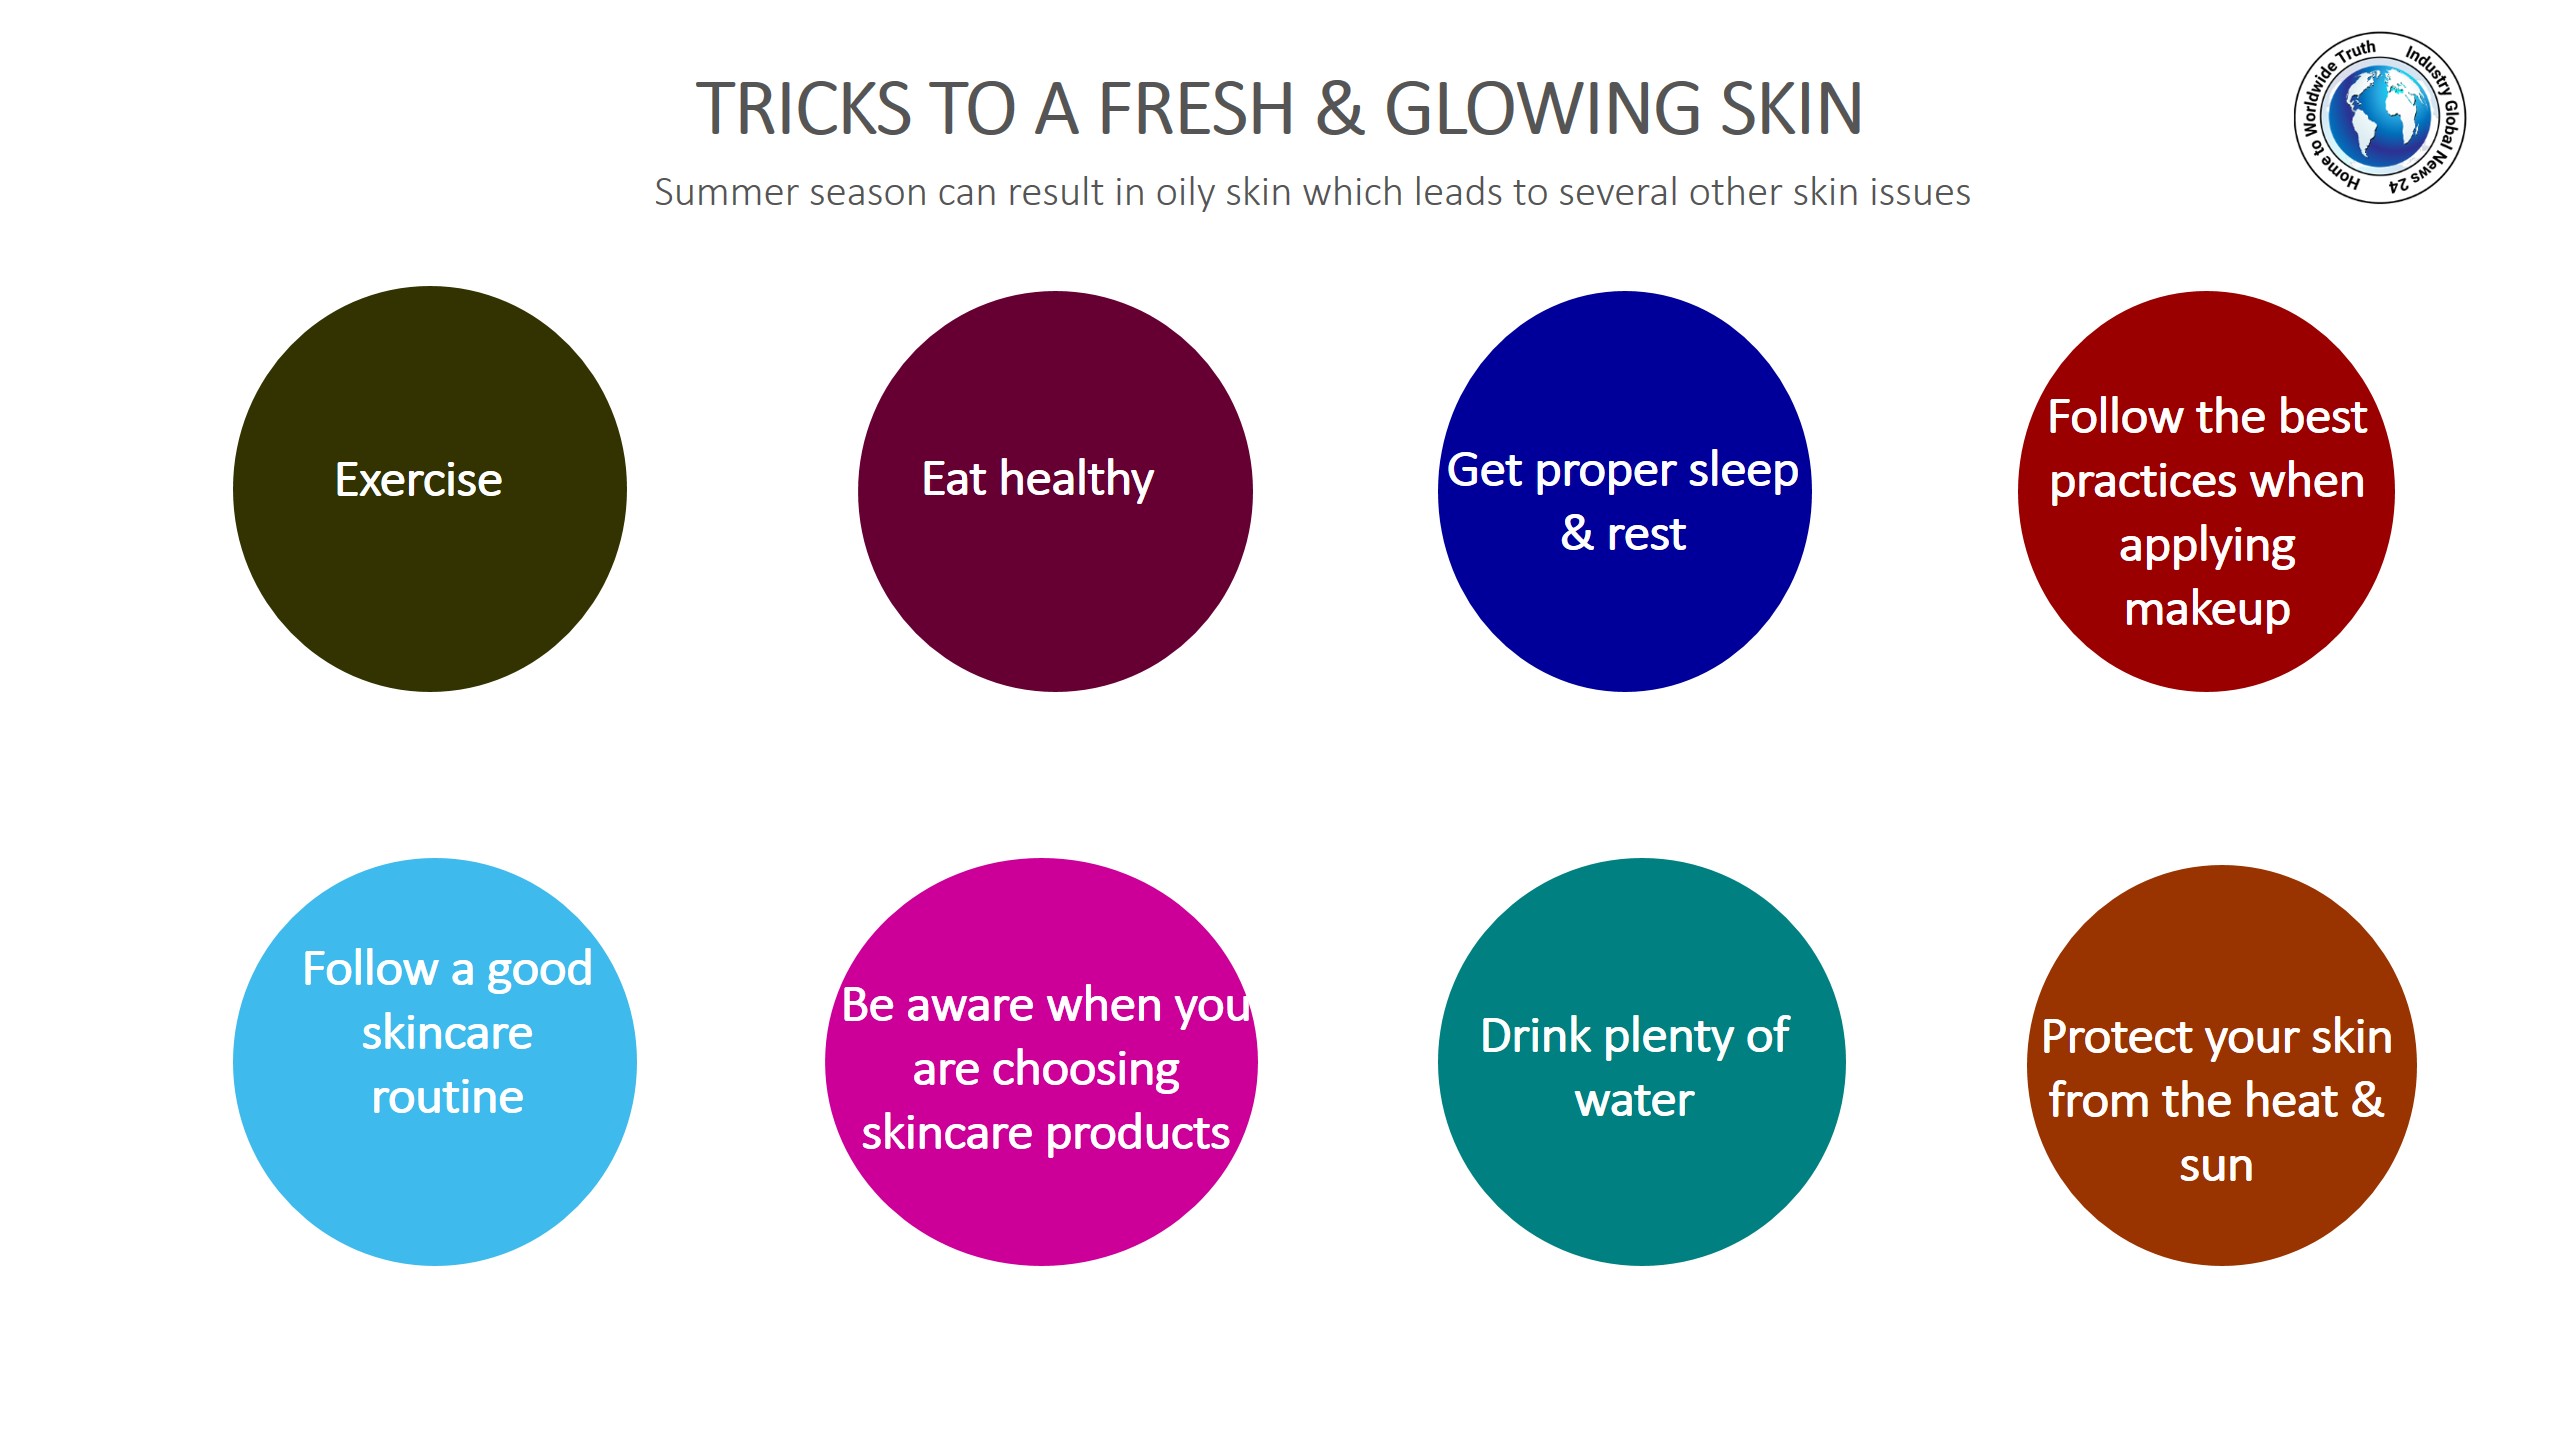 Tricks to a fresh & glowing skin